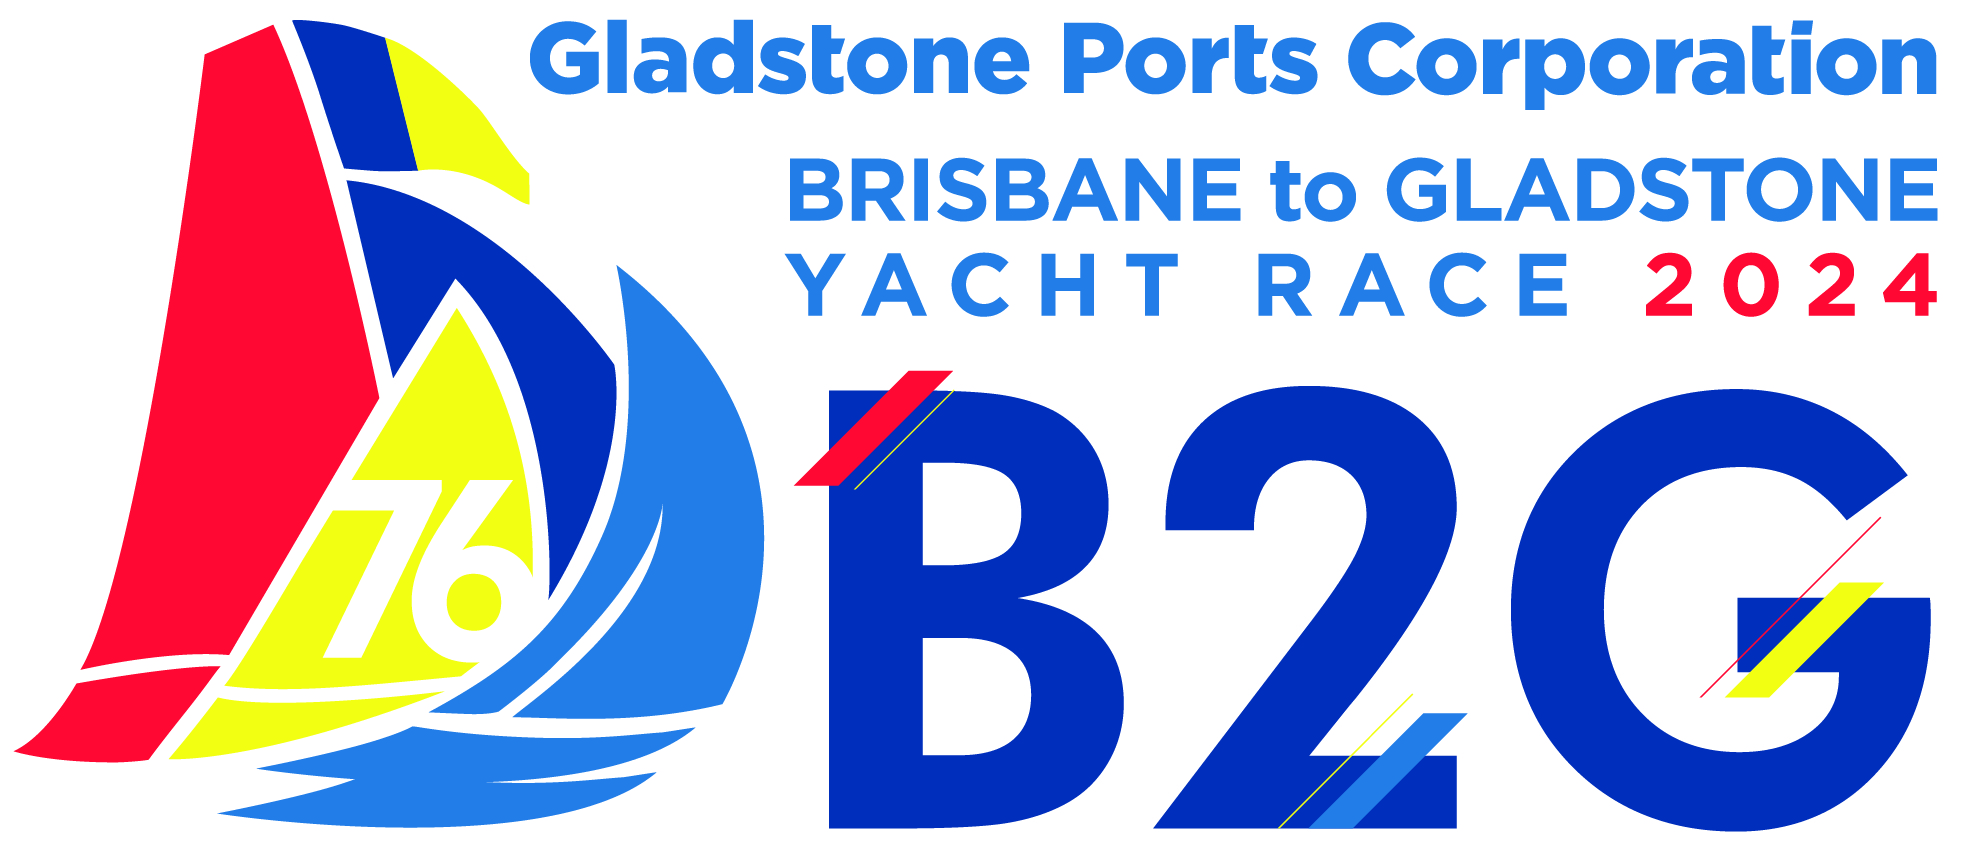 Gladstone Ports Corporation Brisbane to Gladstone Yacht Race B2G